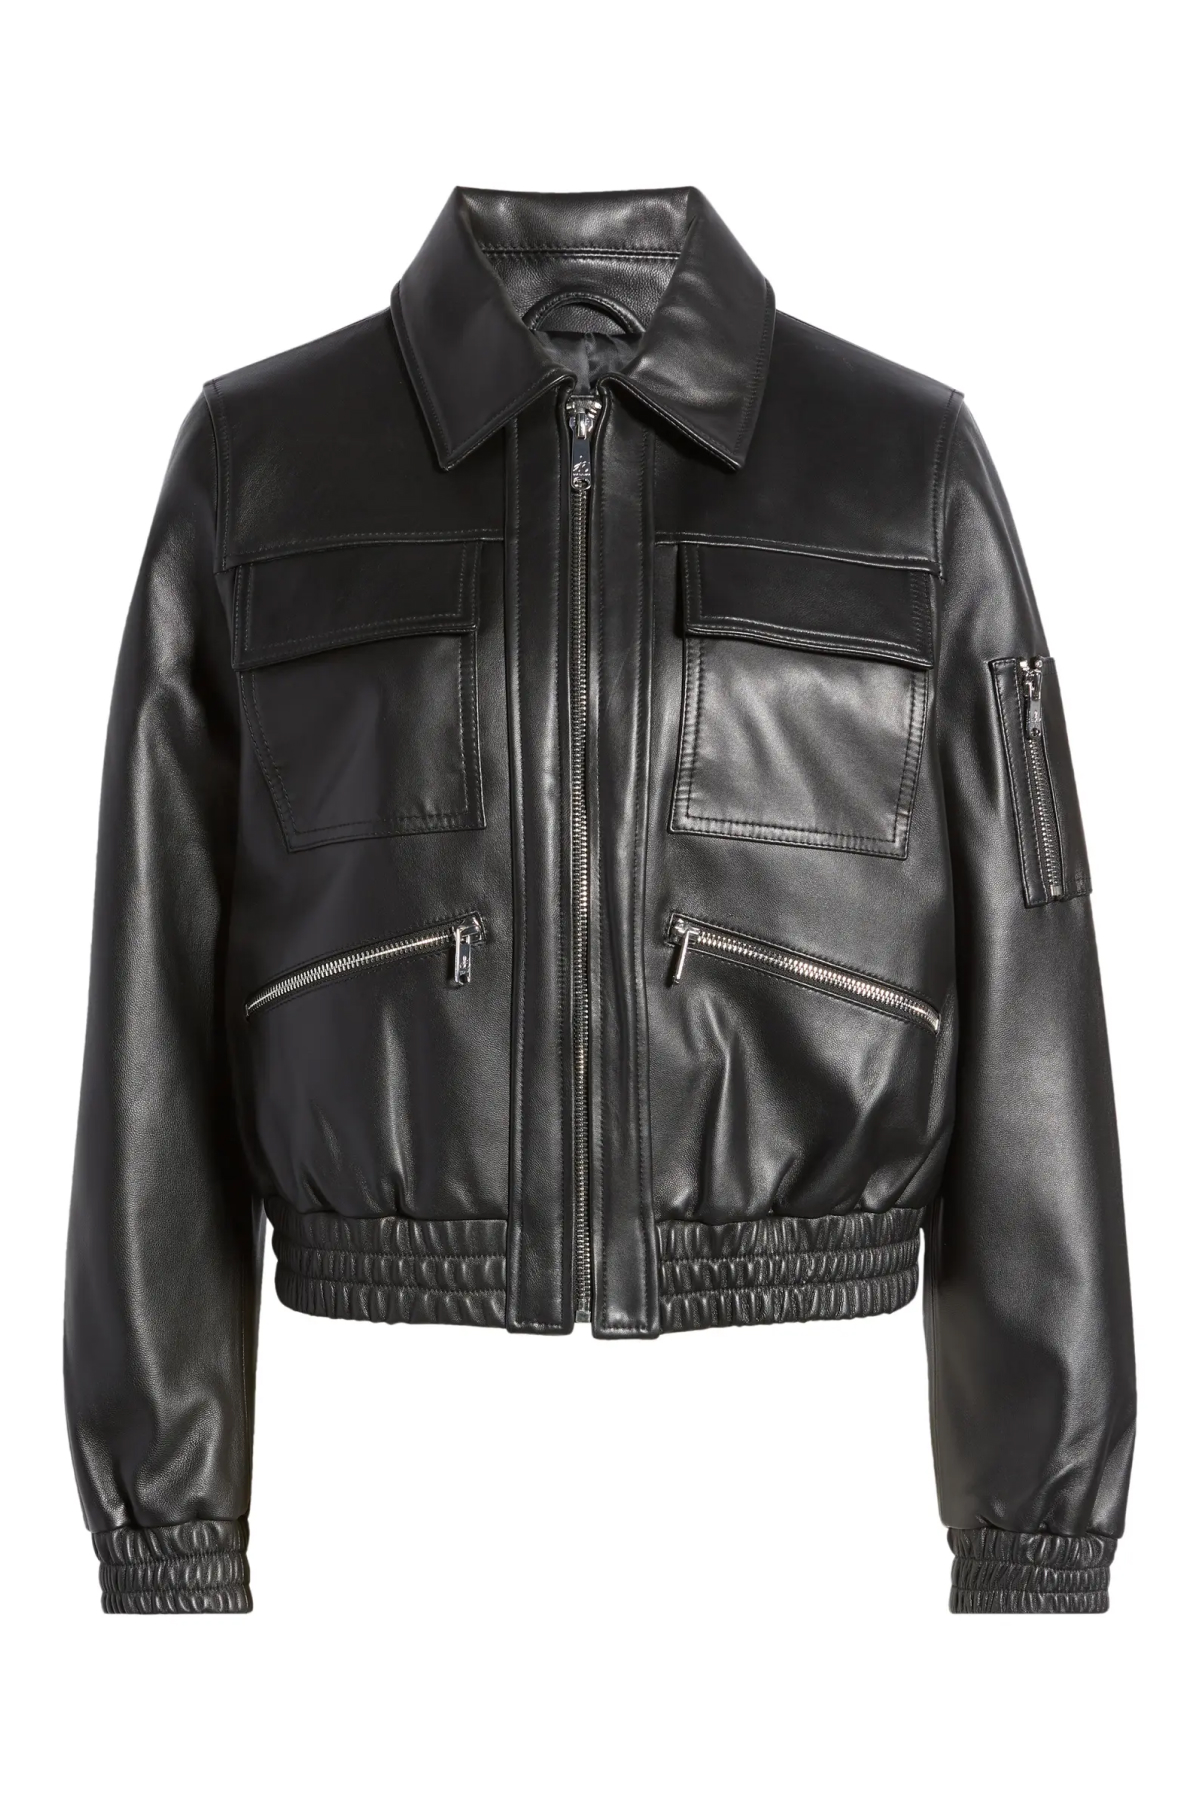 Sam Edelman Leather Bomber Jacket